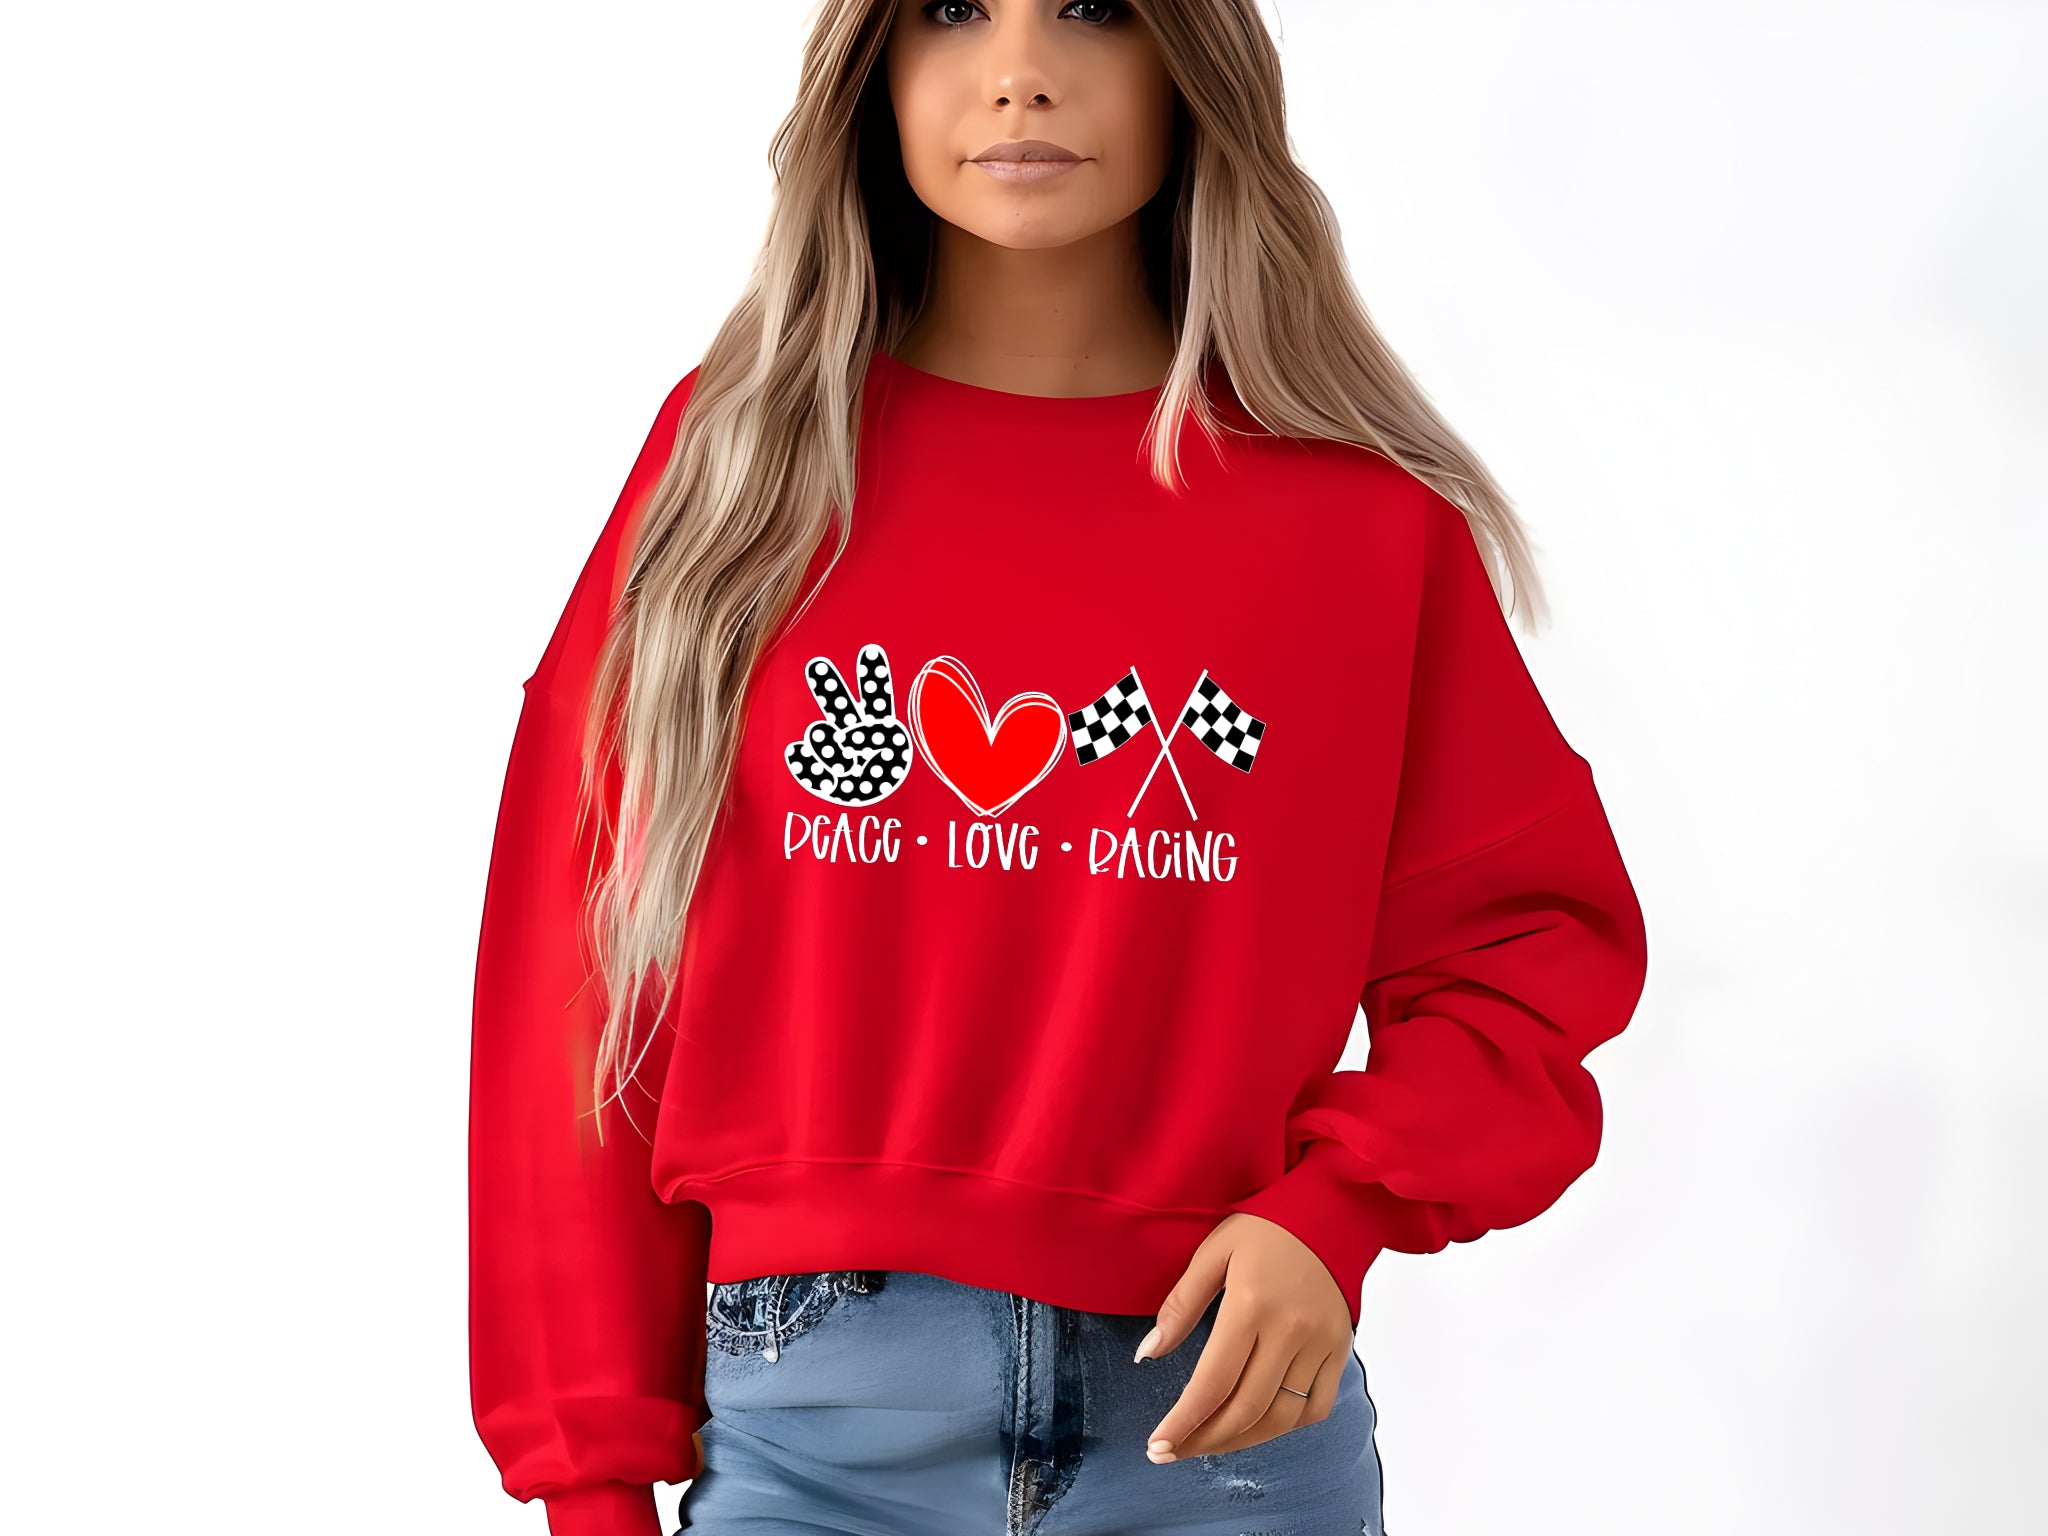 Racing - Peace Love Racing Graphic Print Women’s Sweatshirt